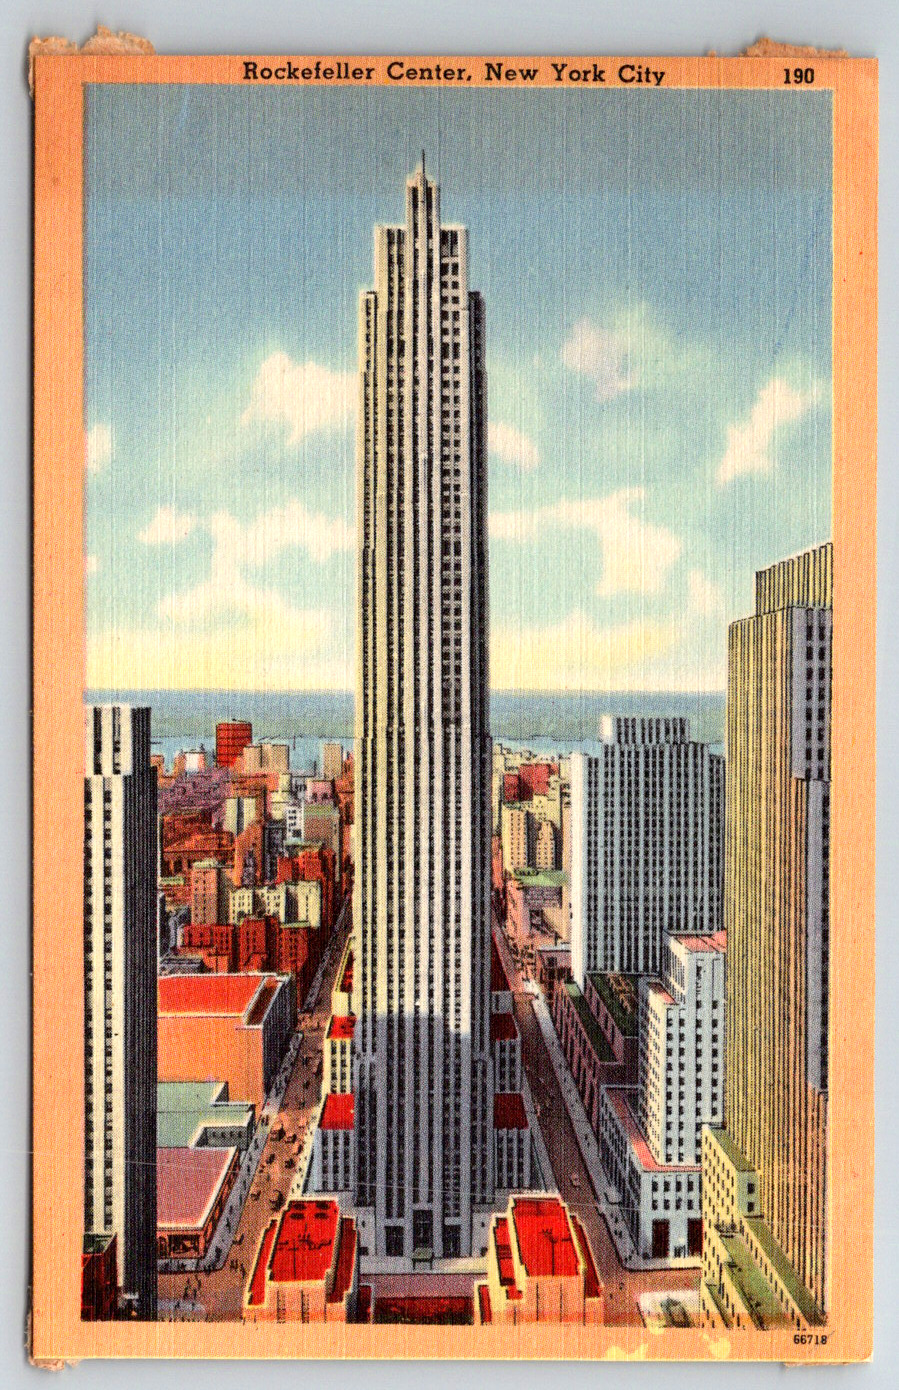 c1940s Rockefeller Center New York City Vintage Linen Postcard